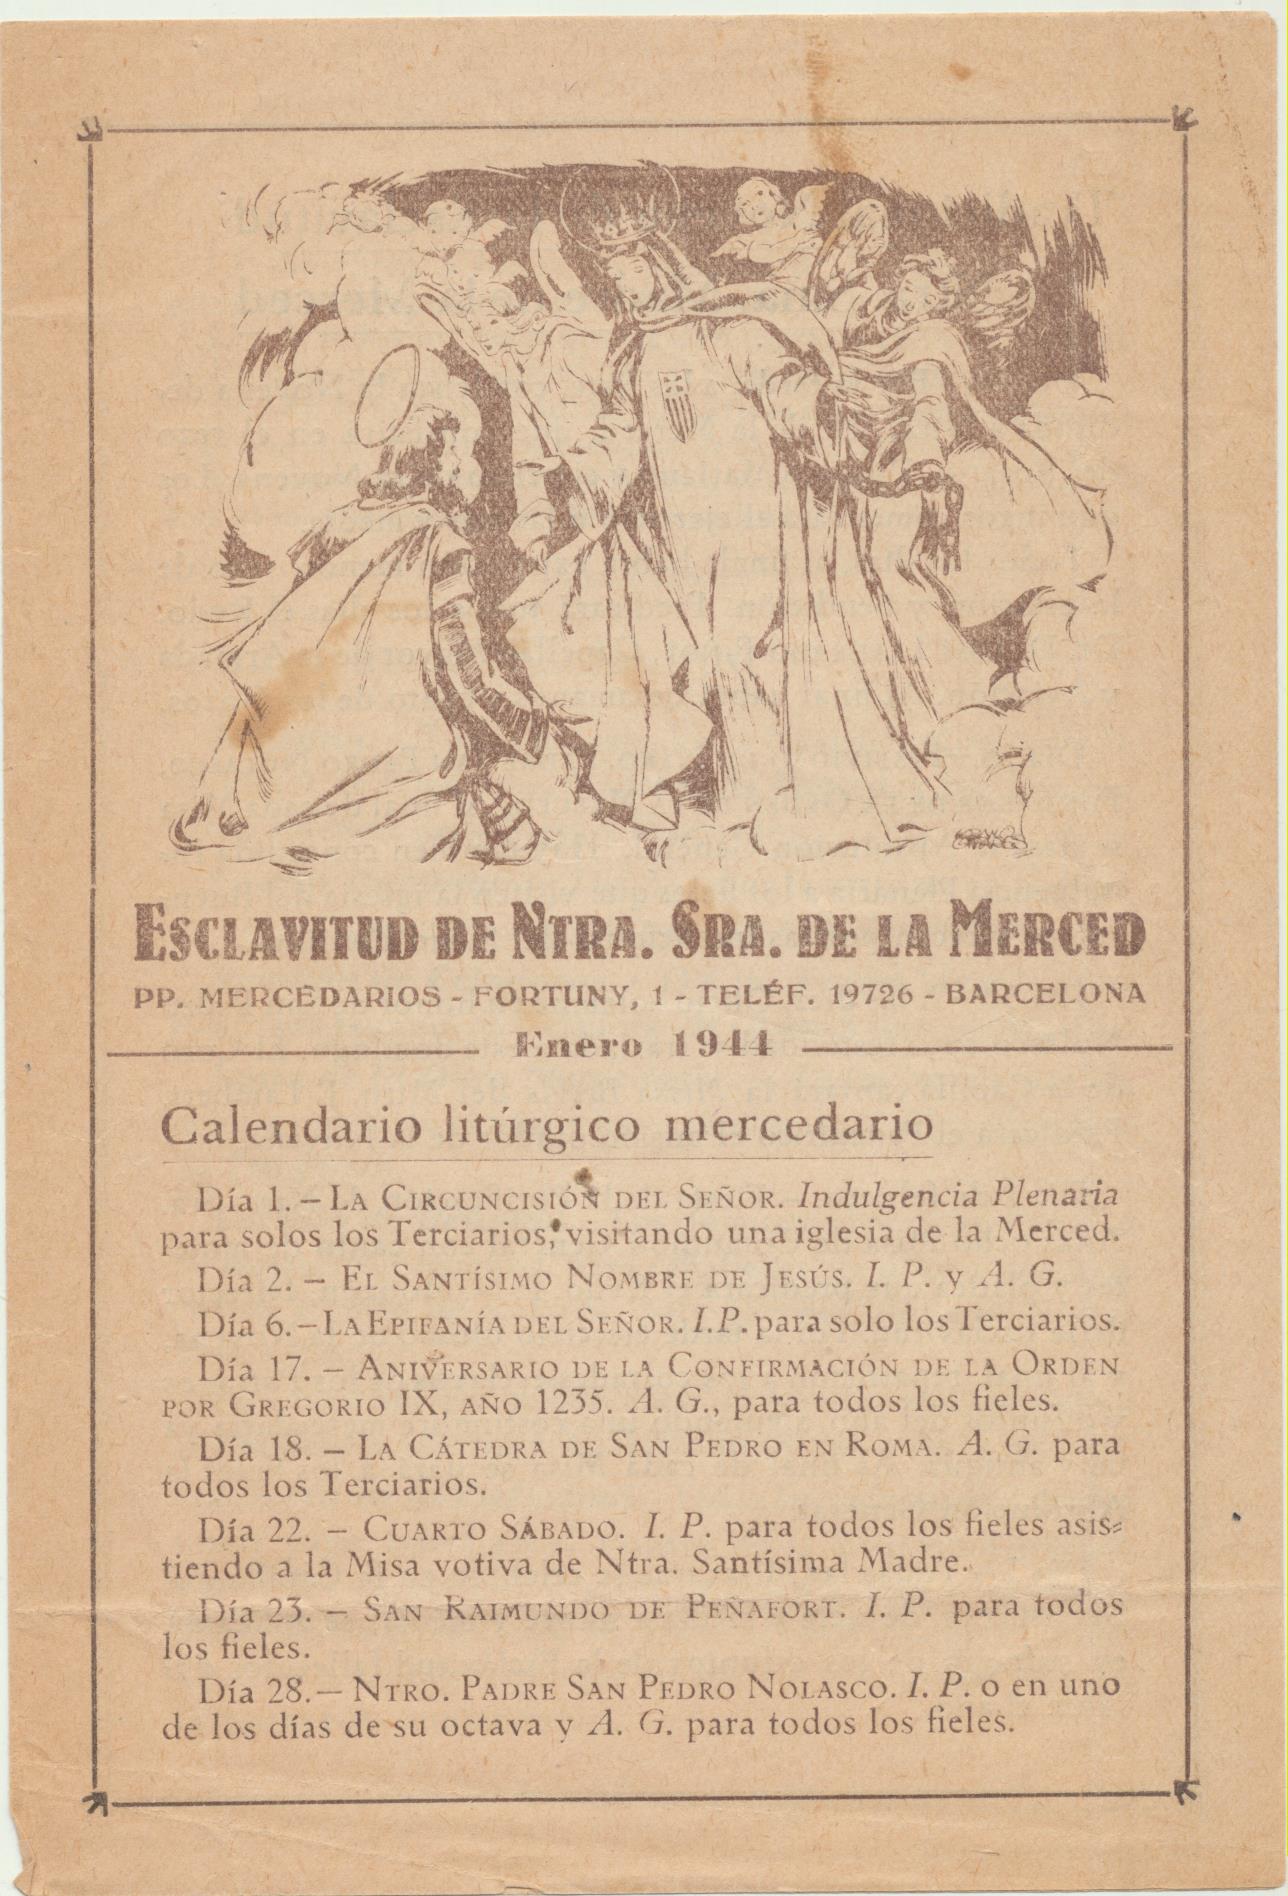 Esclavitud de Ntra. Sra. de la Merced. Barcelona Enero de 1941. doble hoja